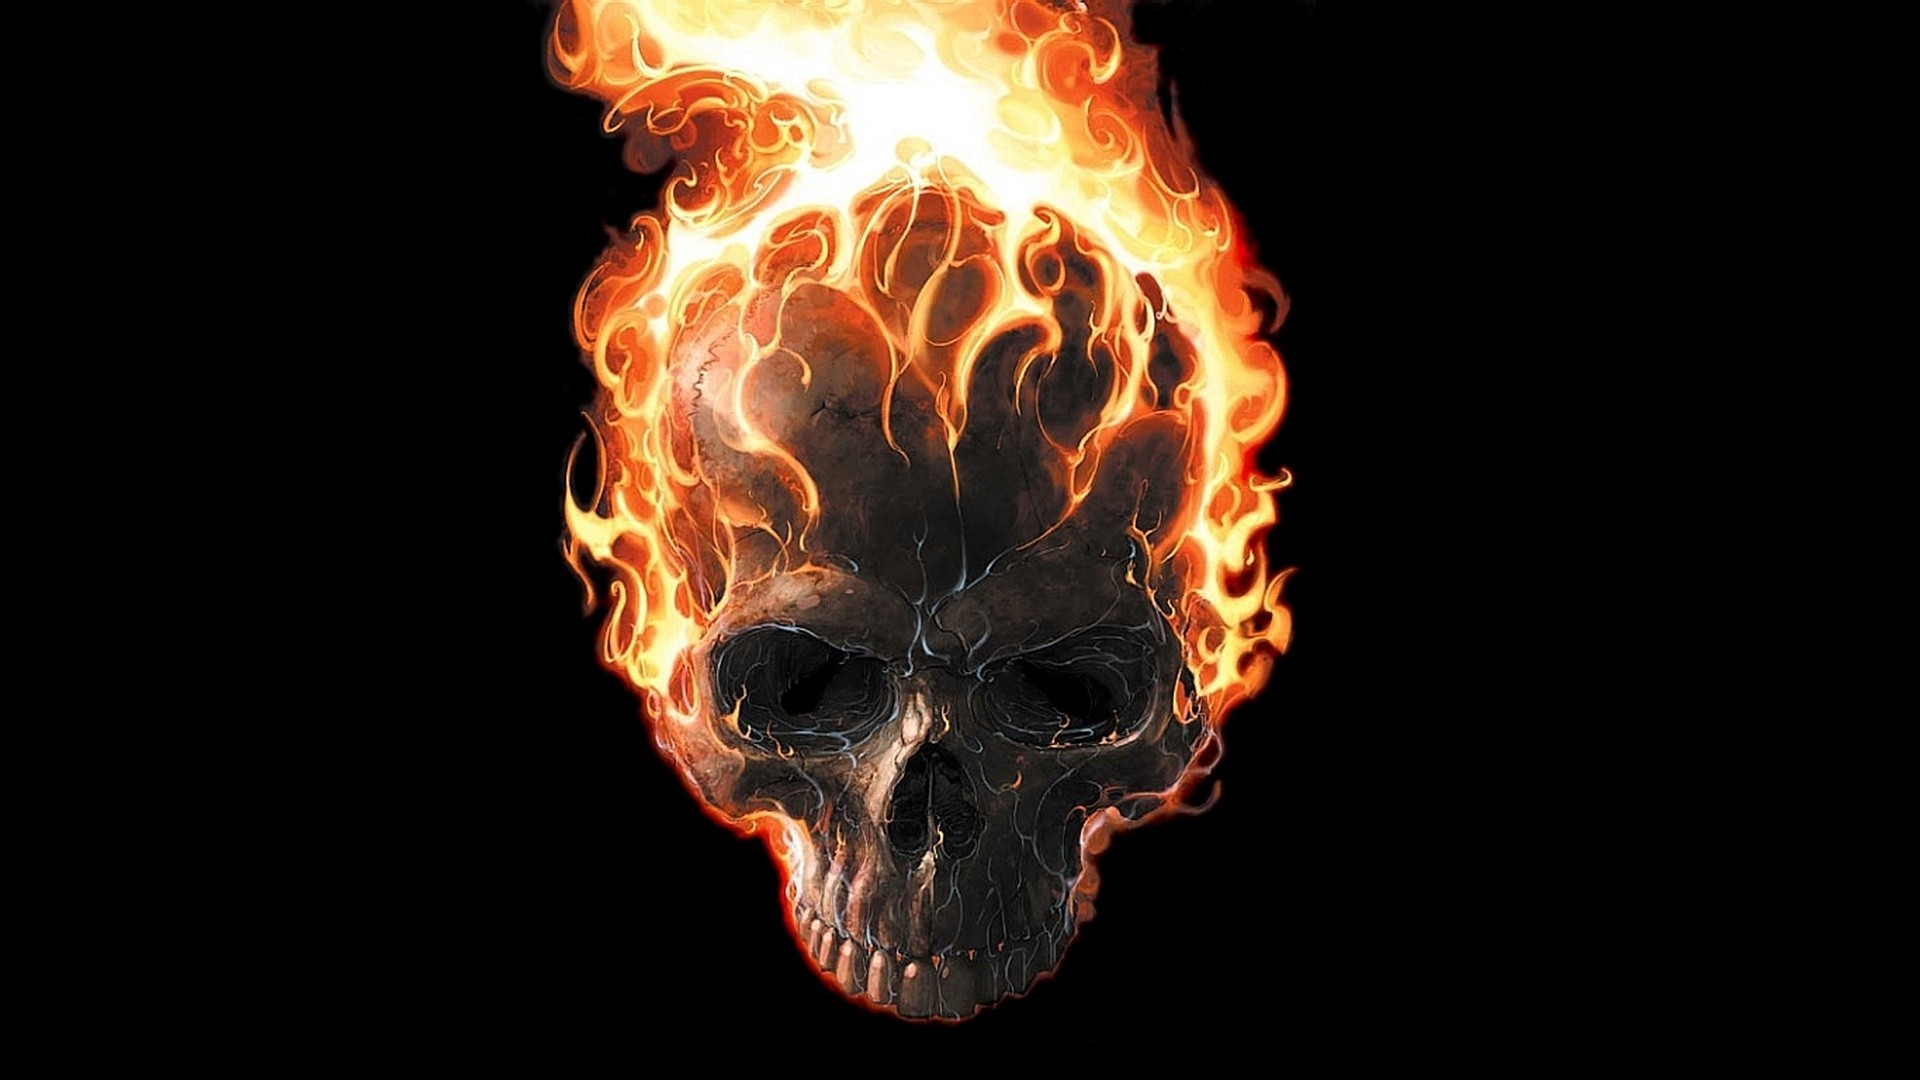 General 1920x1080 digital art black background minimalism skull teeth fire Ghost Rider movie poster burning comics Marvel Comics Flame Painter